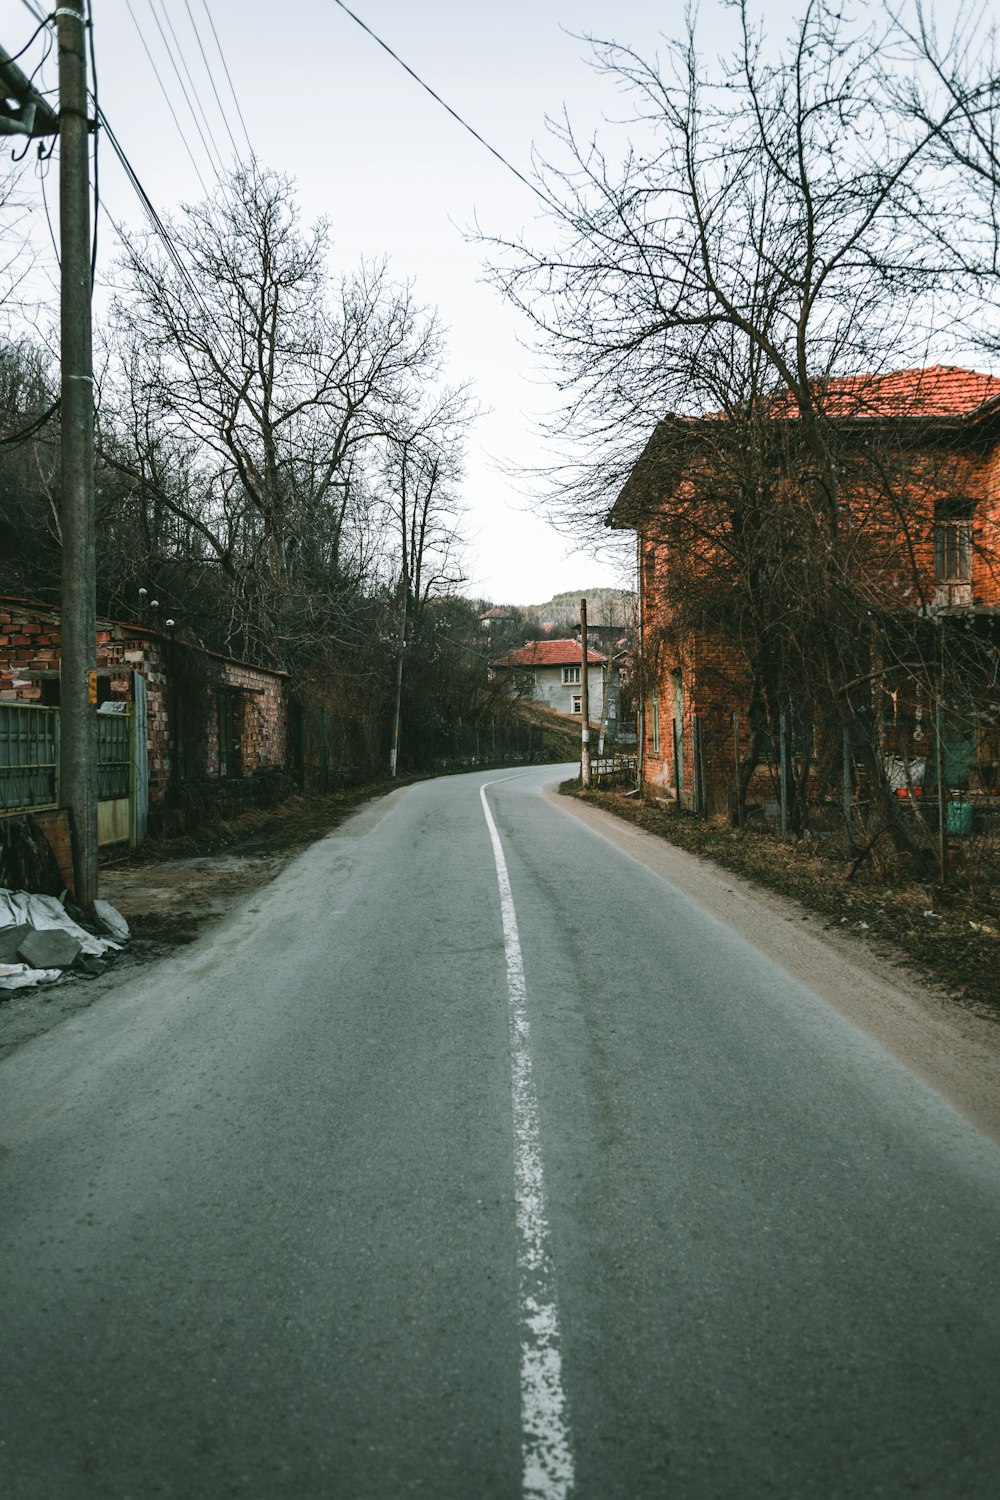 gray asphalt road between bare trees during daytime